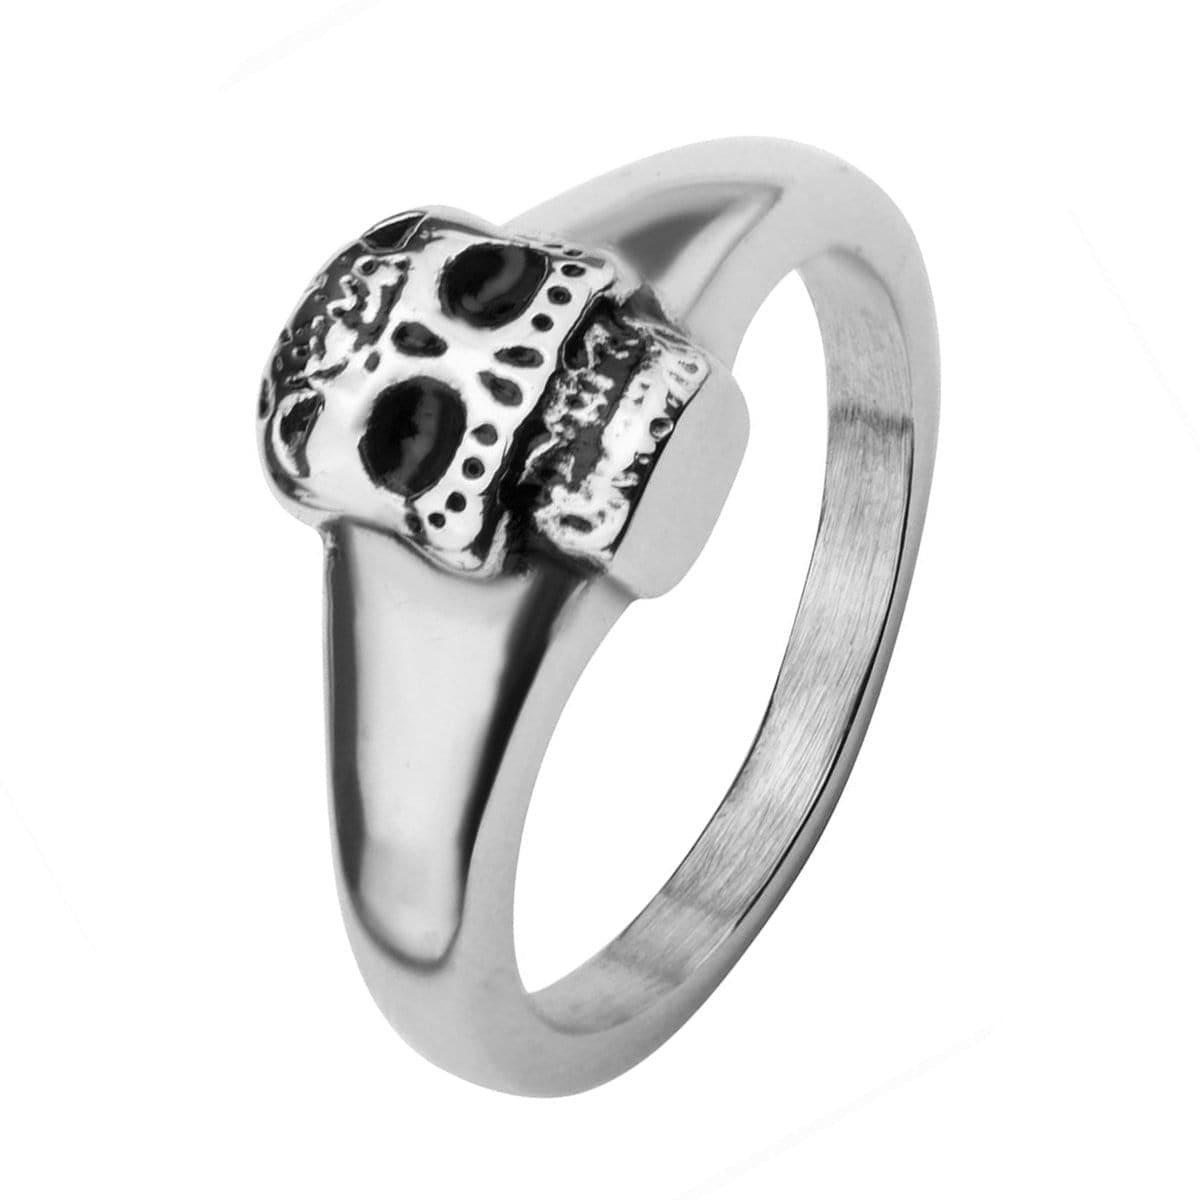 INOX JEWELRY Rings Silver Tone Stainless Steel Sugar Skull Ring